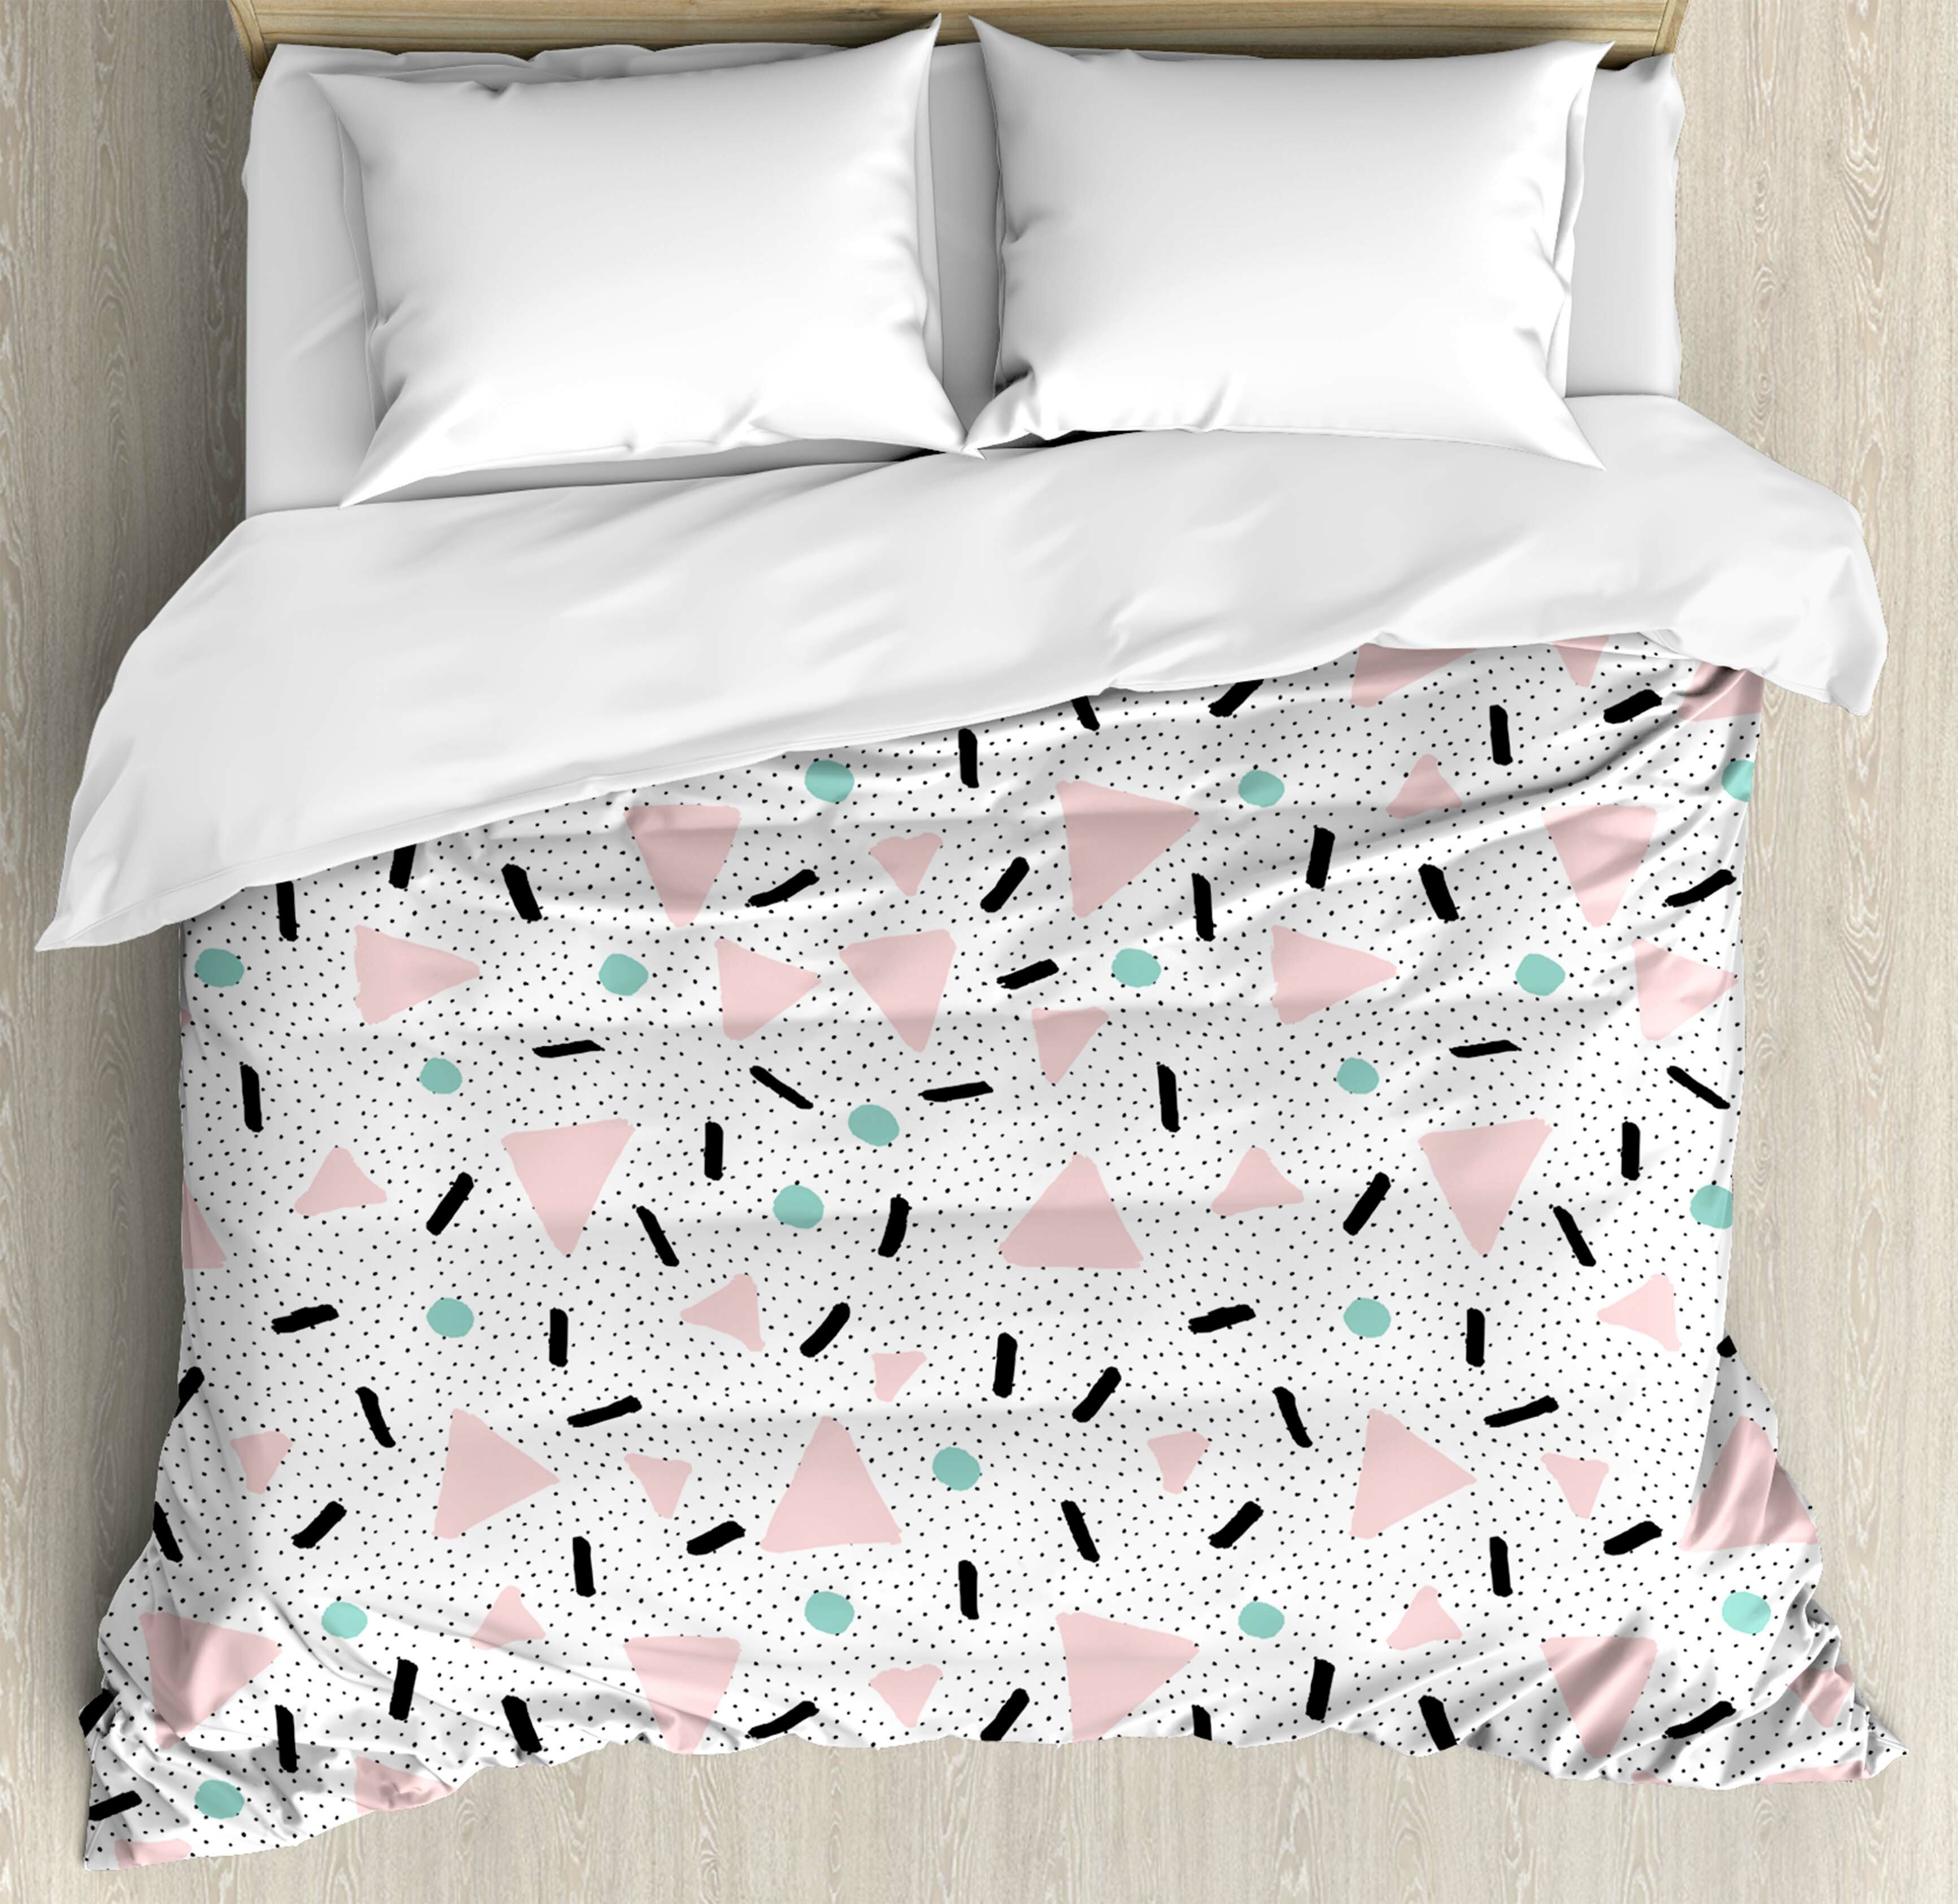 Decorative 3 Piece Bedding Set With 2 Pillow Shams Grey Purple